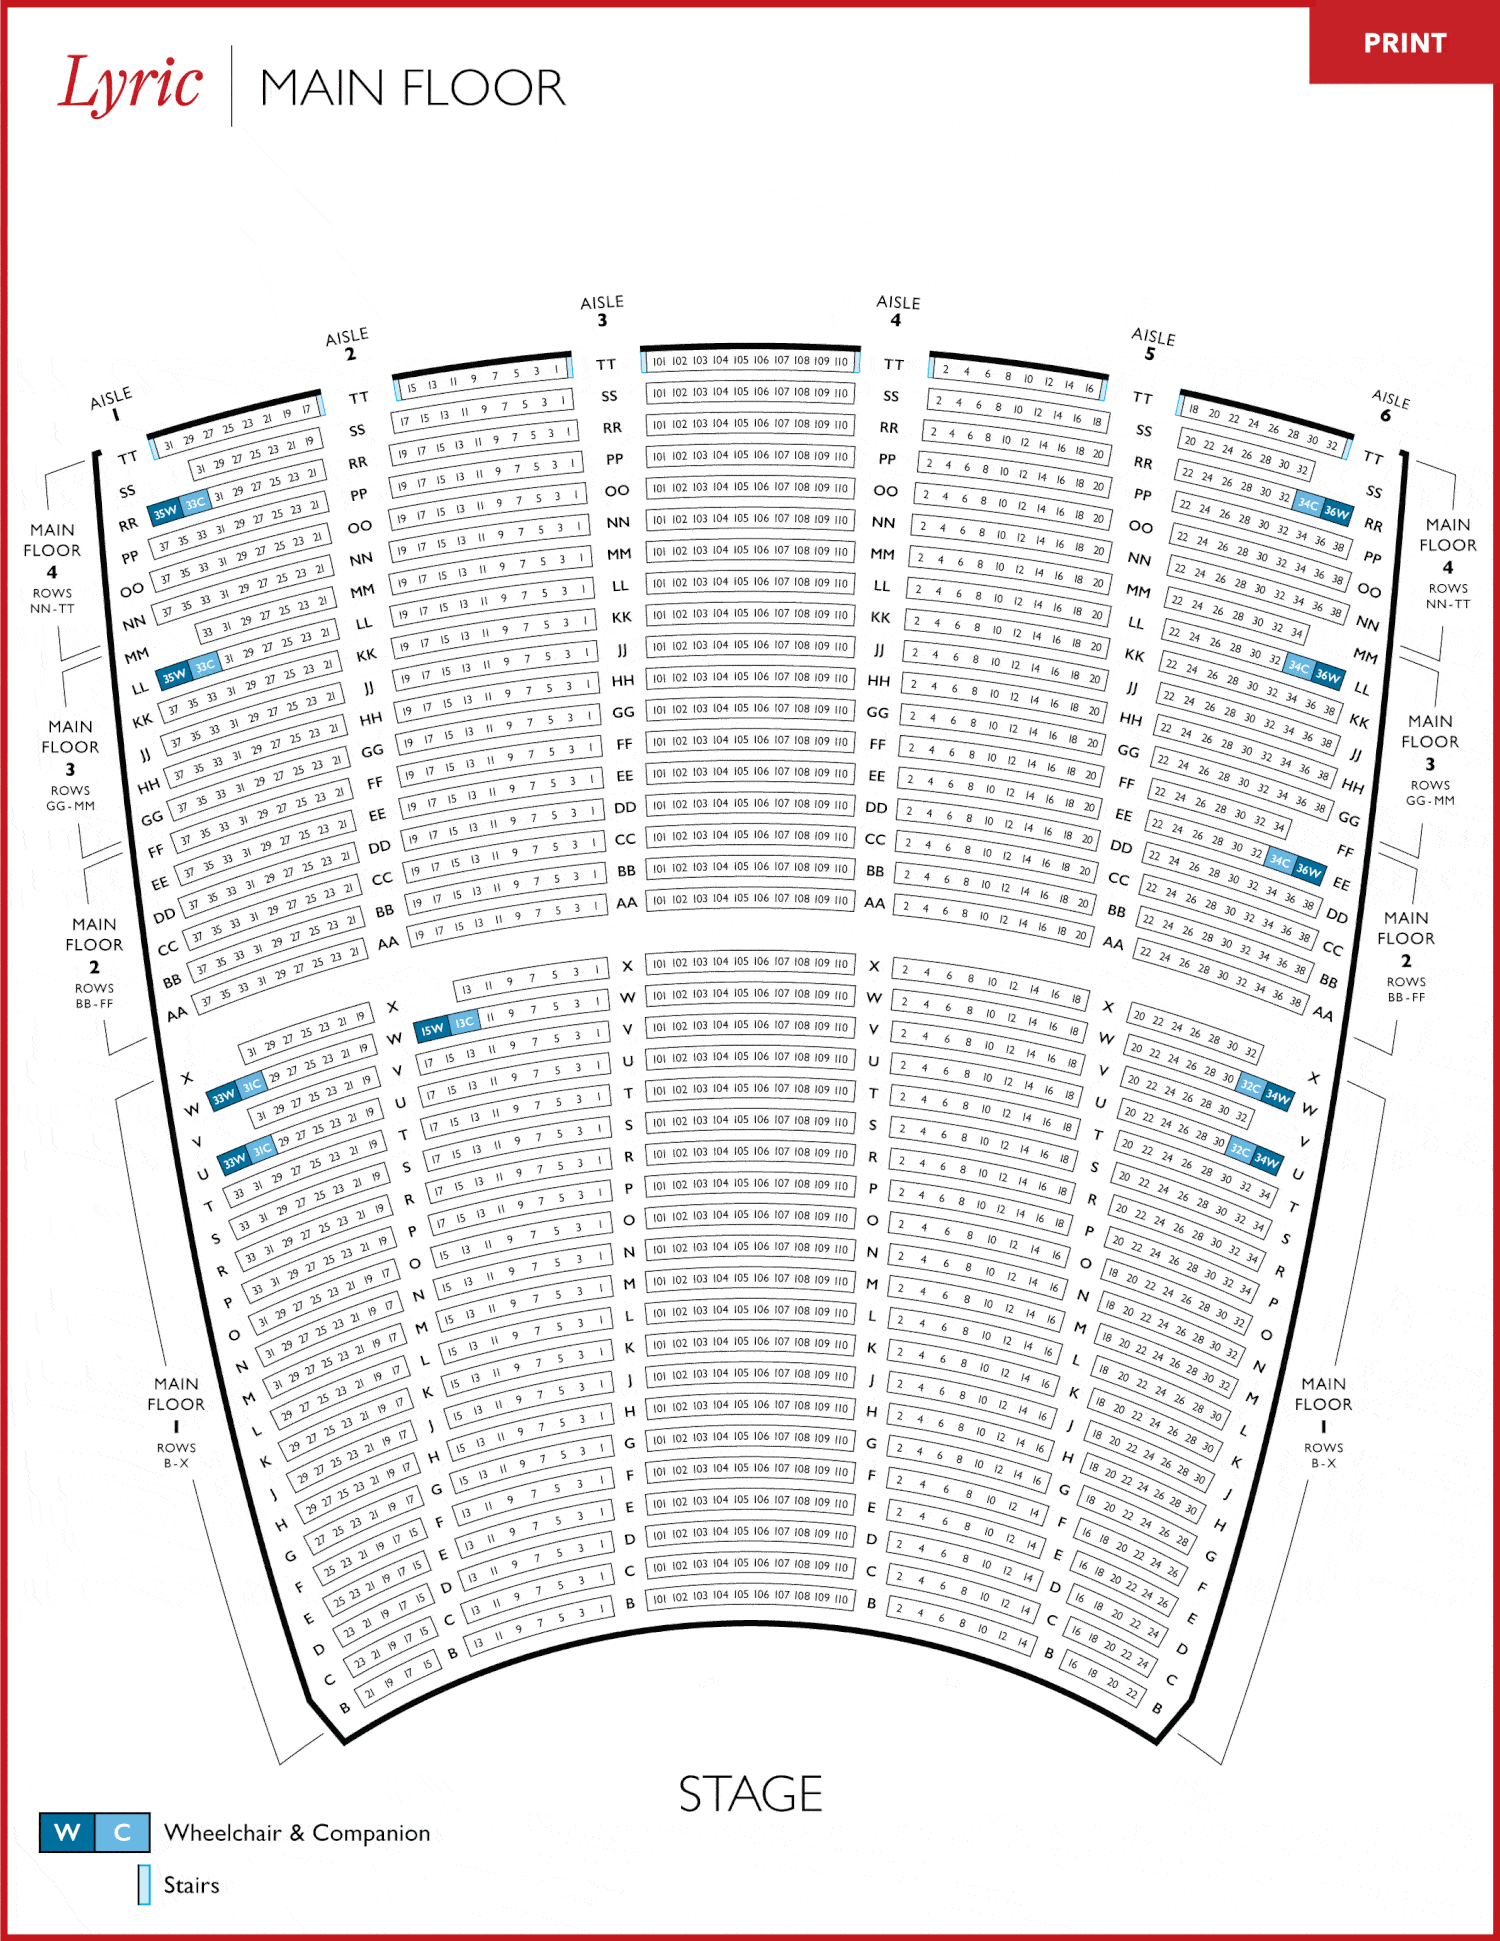 Lyric Opera: Seating Charts